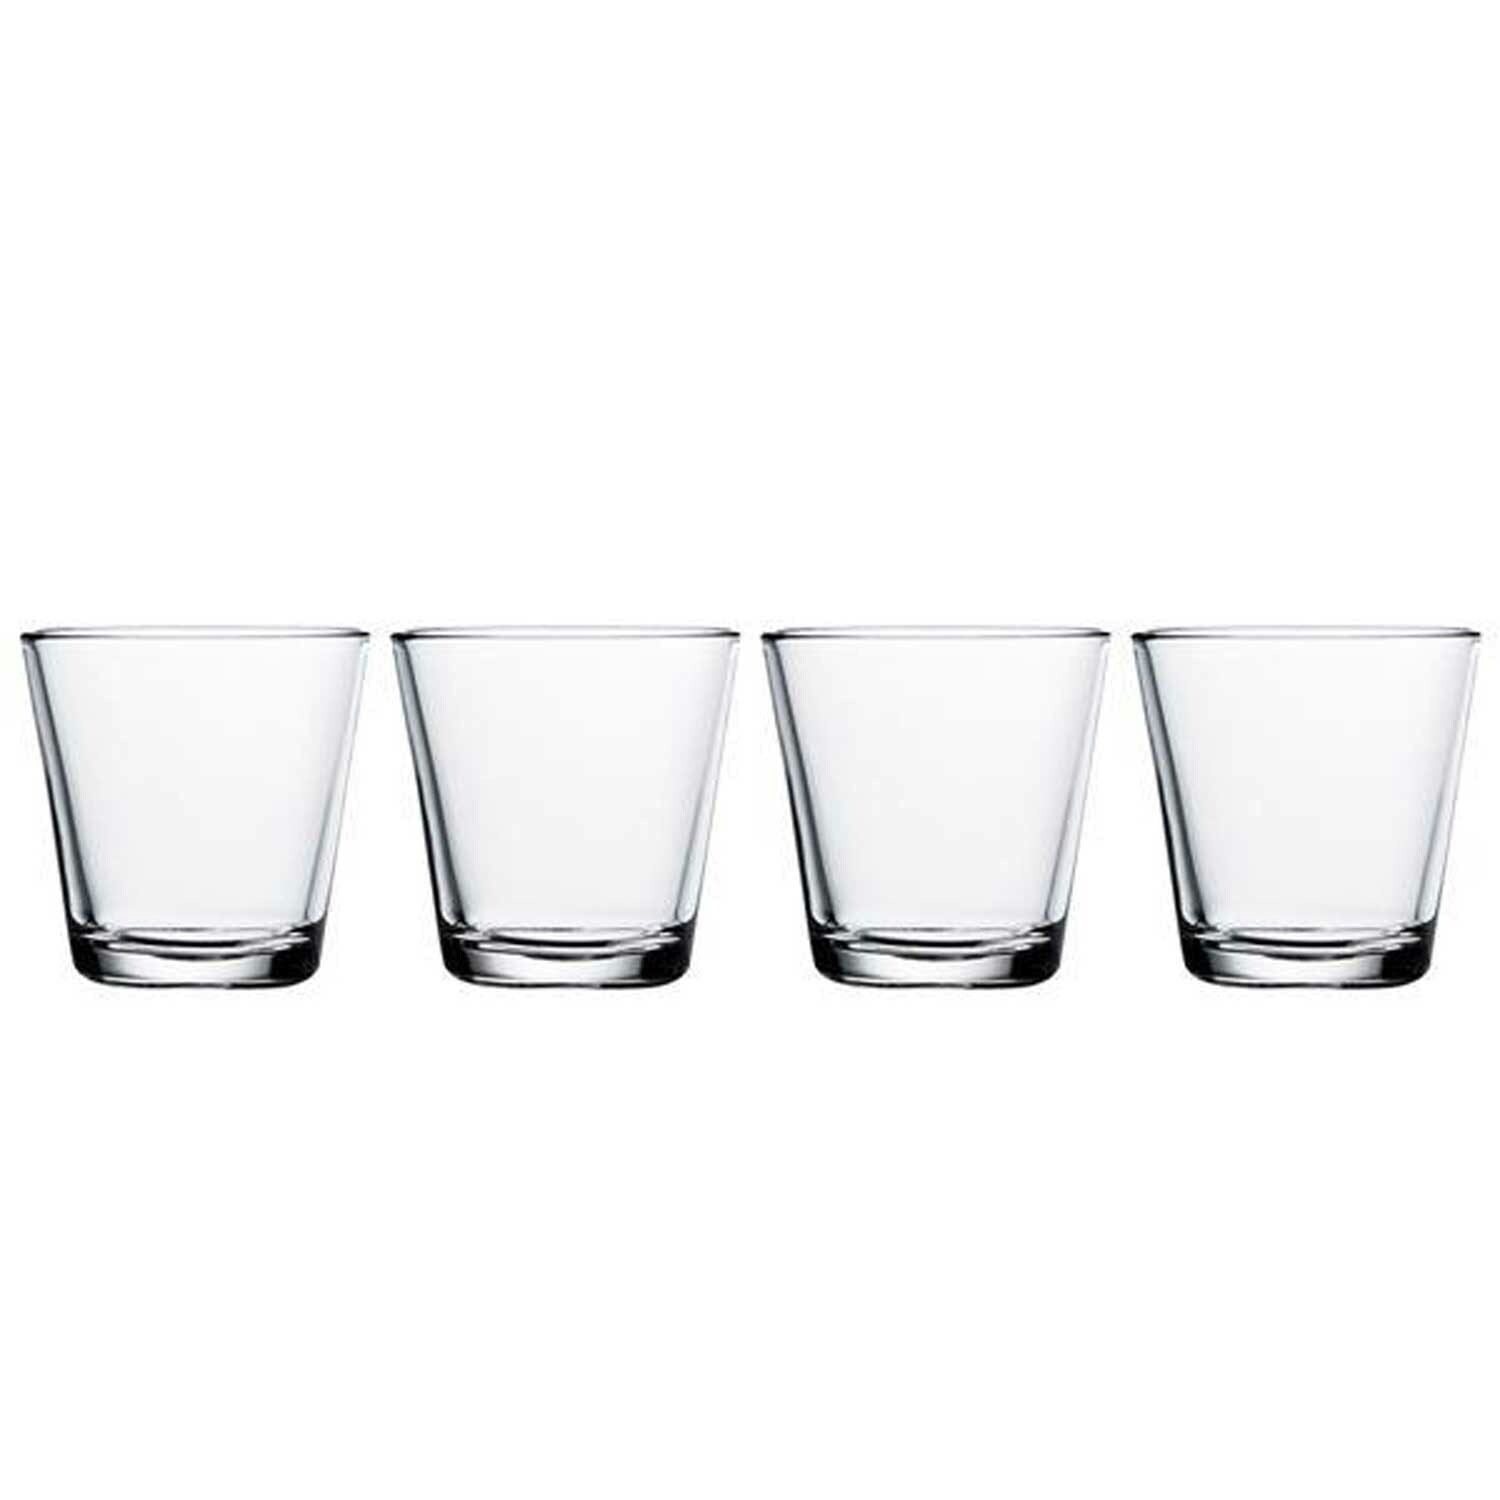 https://royaldesign.com/image/2/iittala-kartio-drinking-glasses-clear-4-pack-0